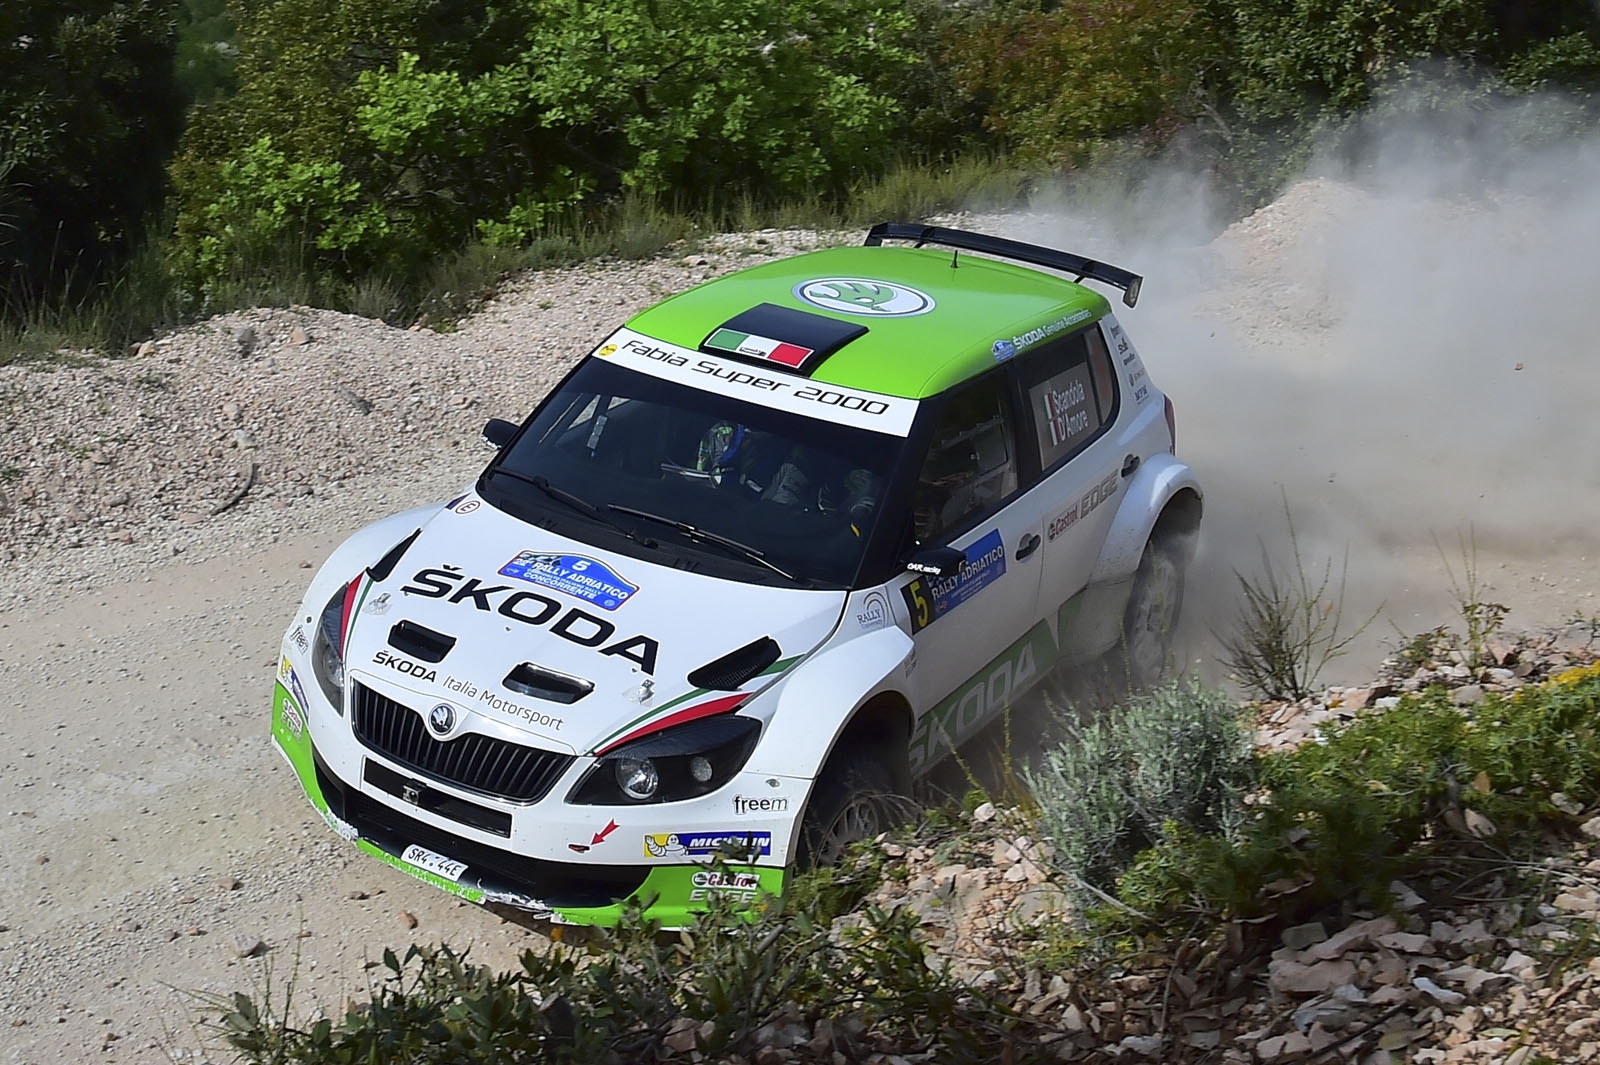 CIR – Scandola vince il Rally Adriatico su Fabia Super 2000